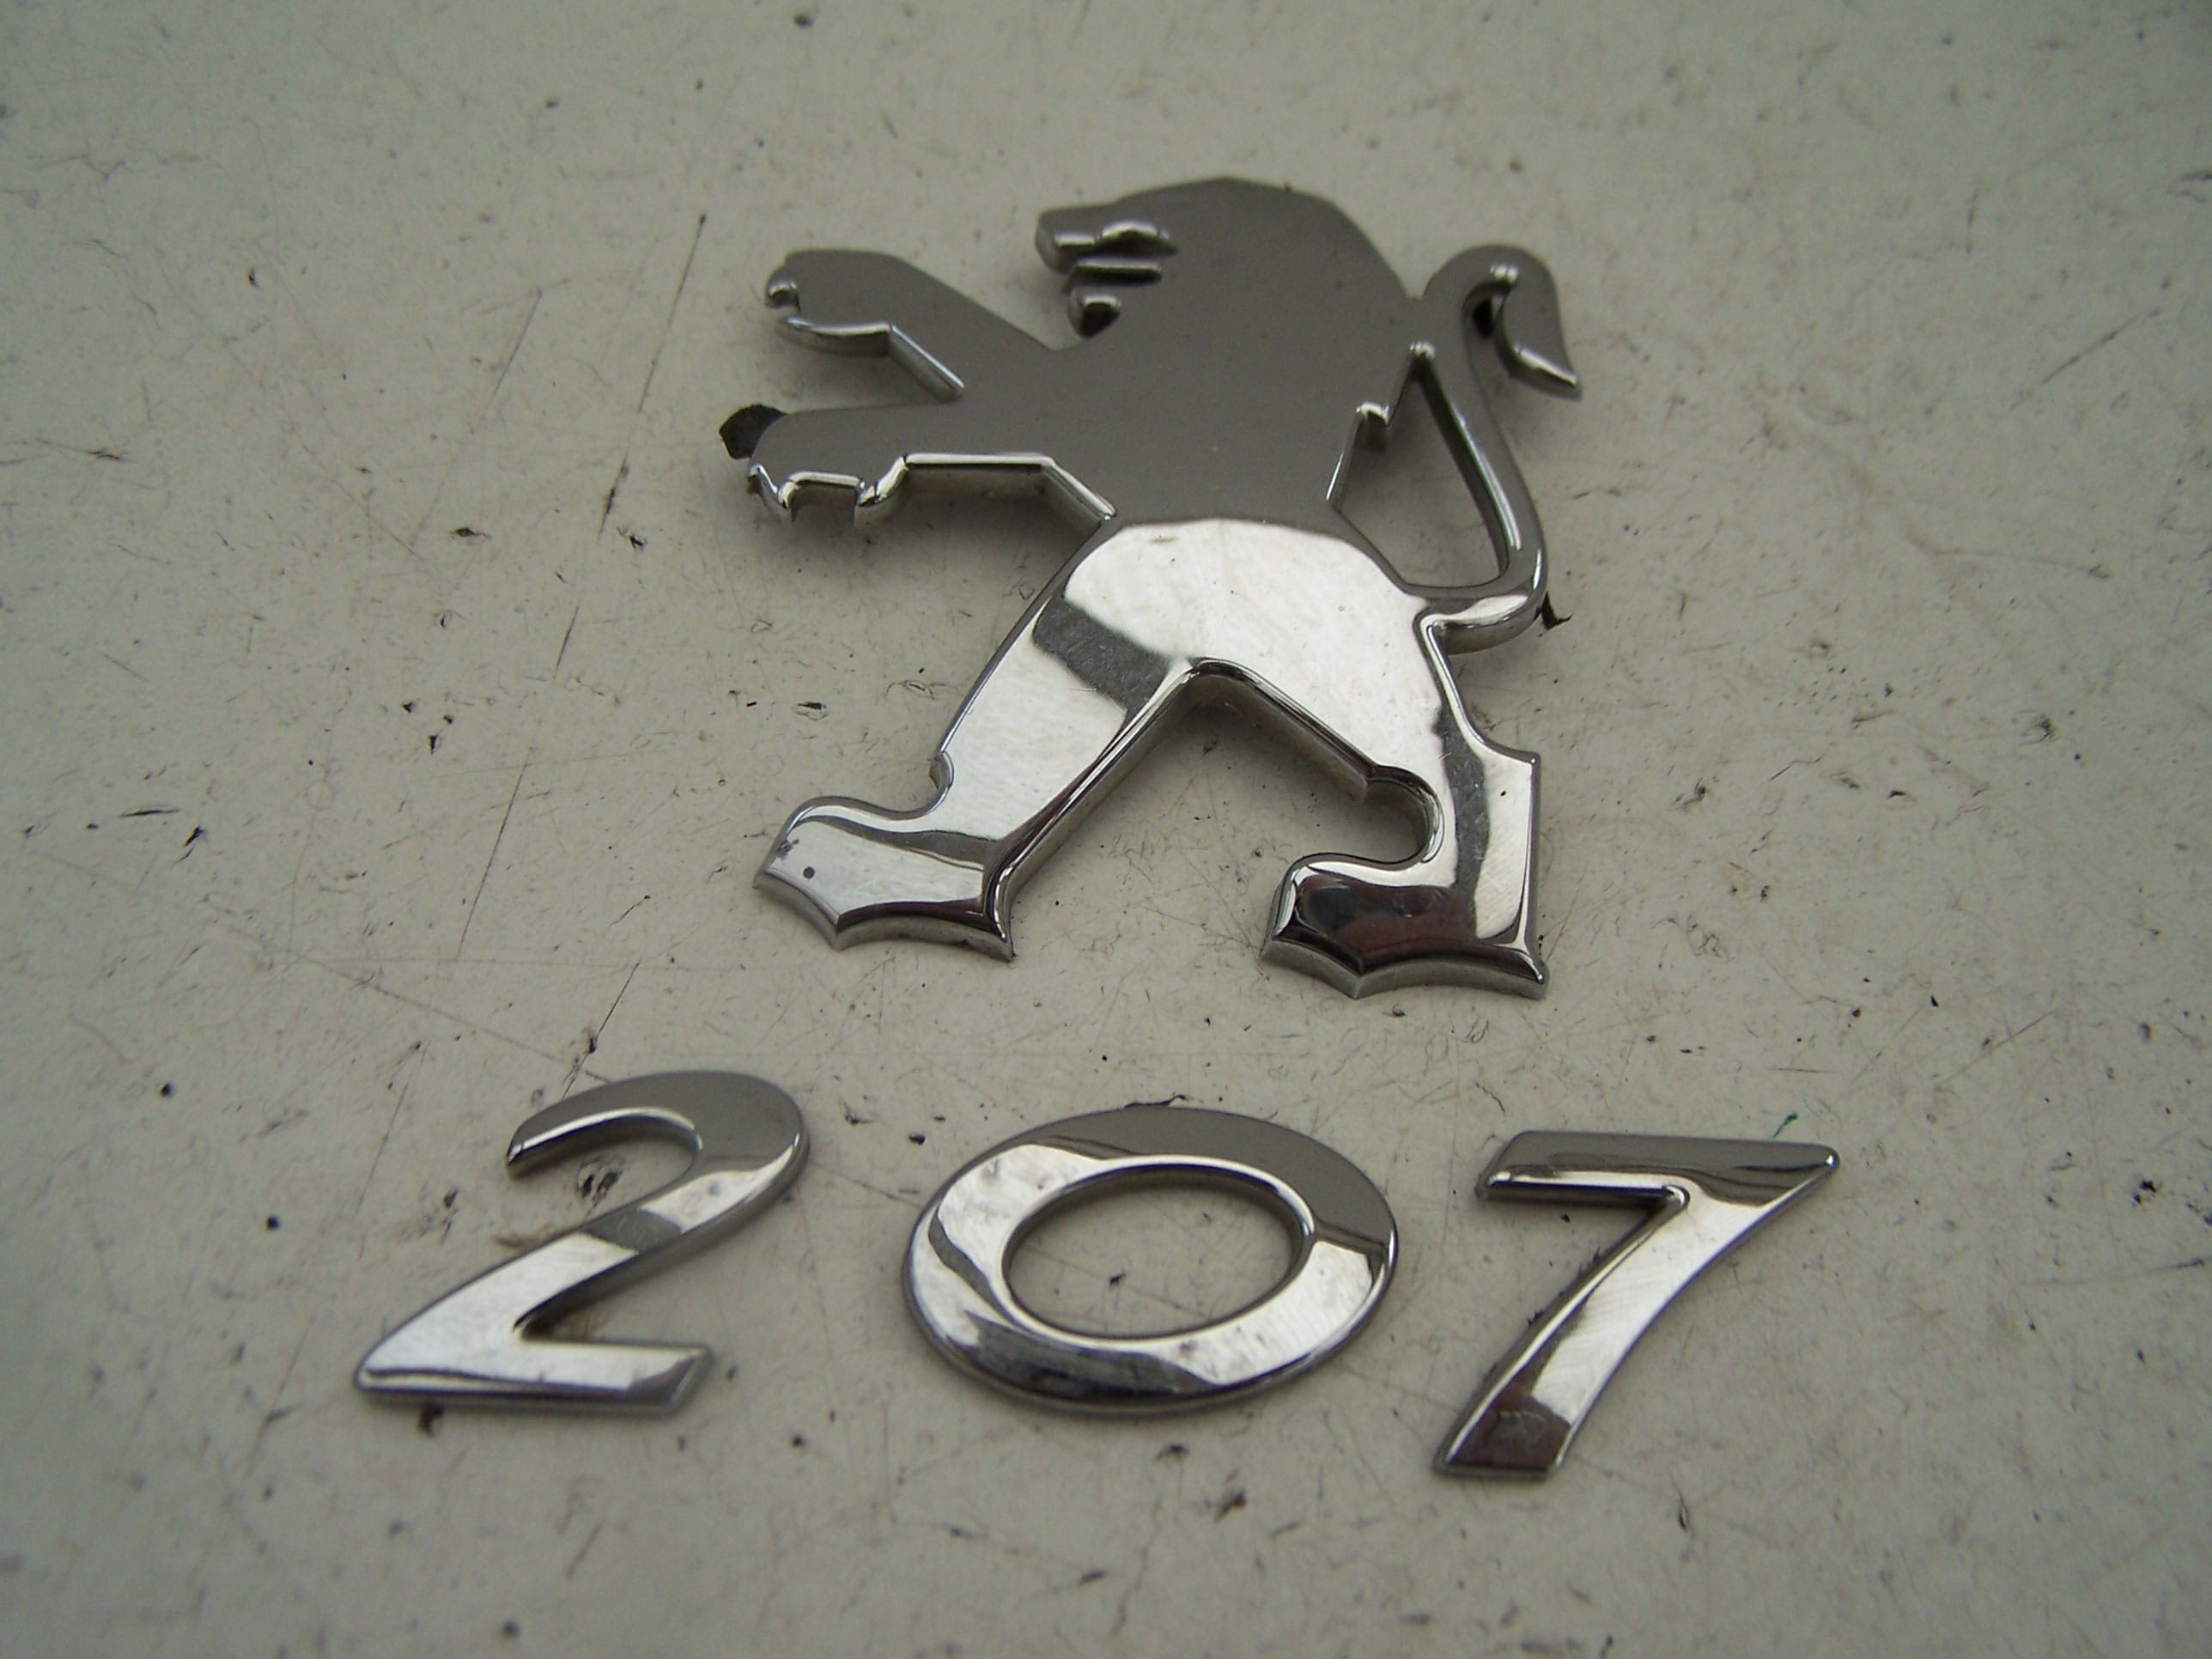 Peugeot 207 tailgate badges (2006-2009)